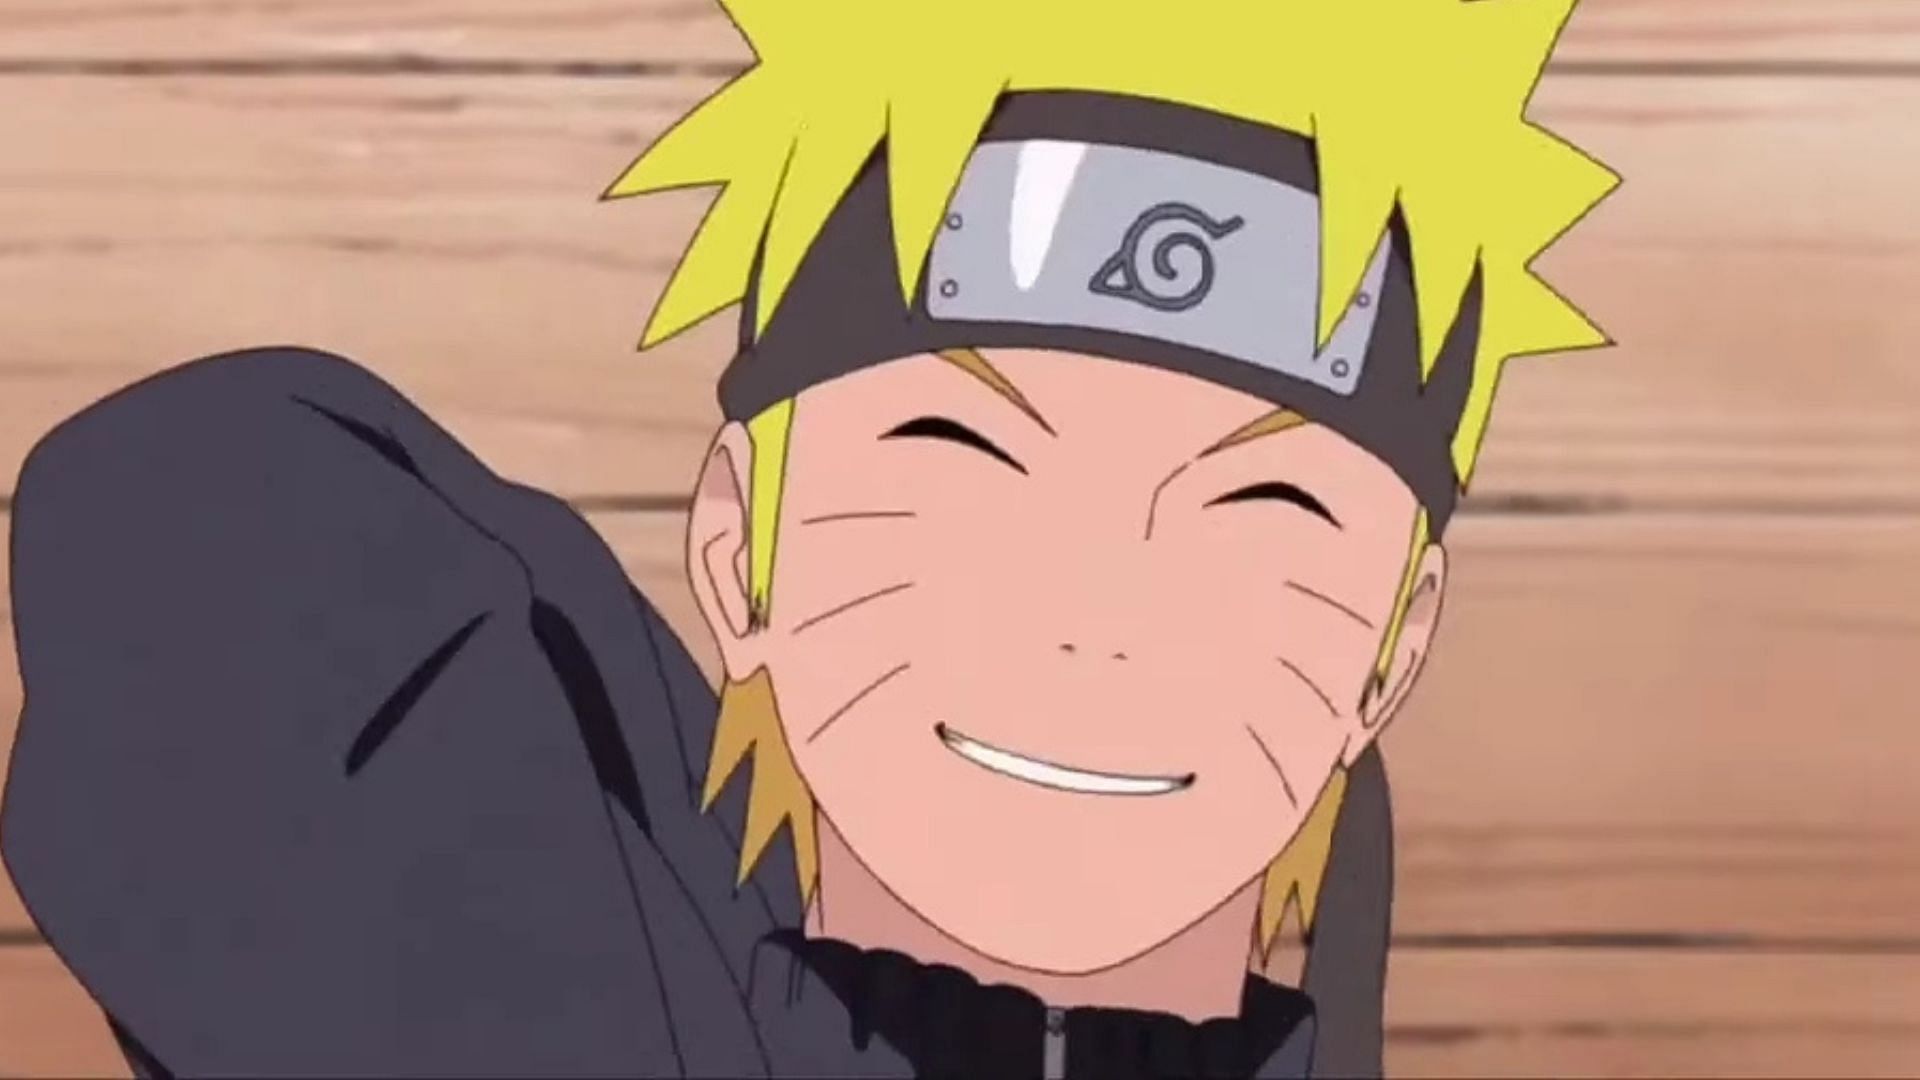 Naruto as seen in the anime (Image via Studio Pierrot)